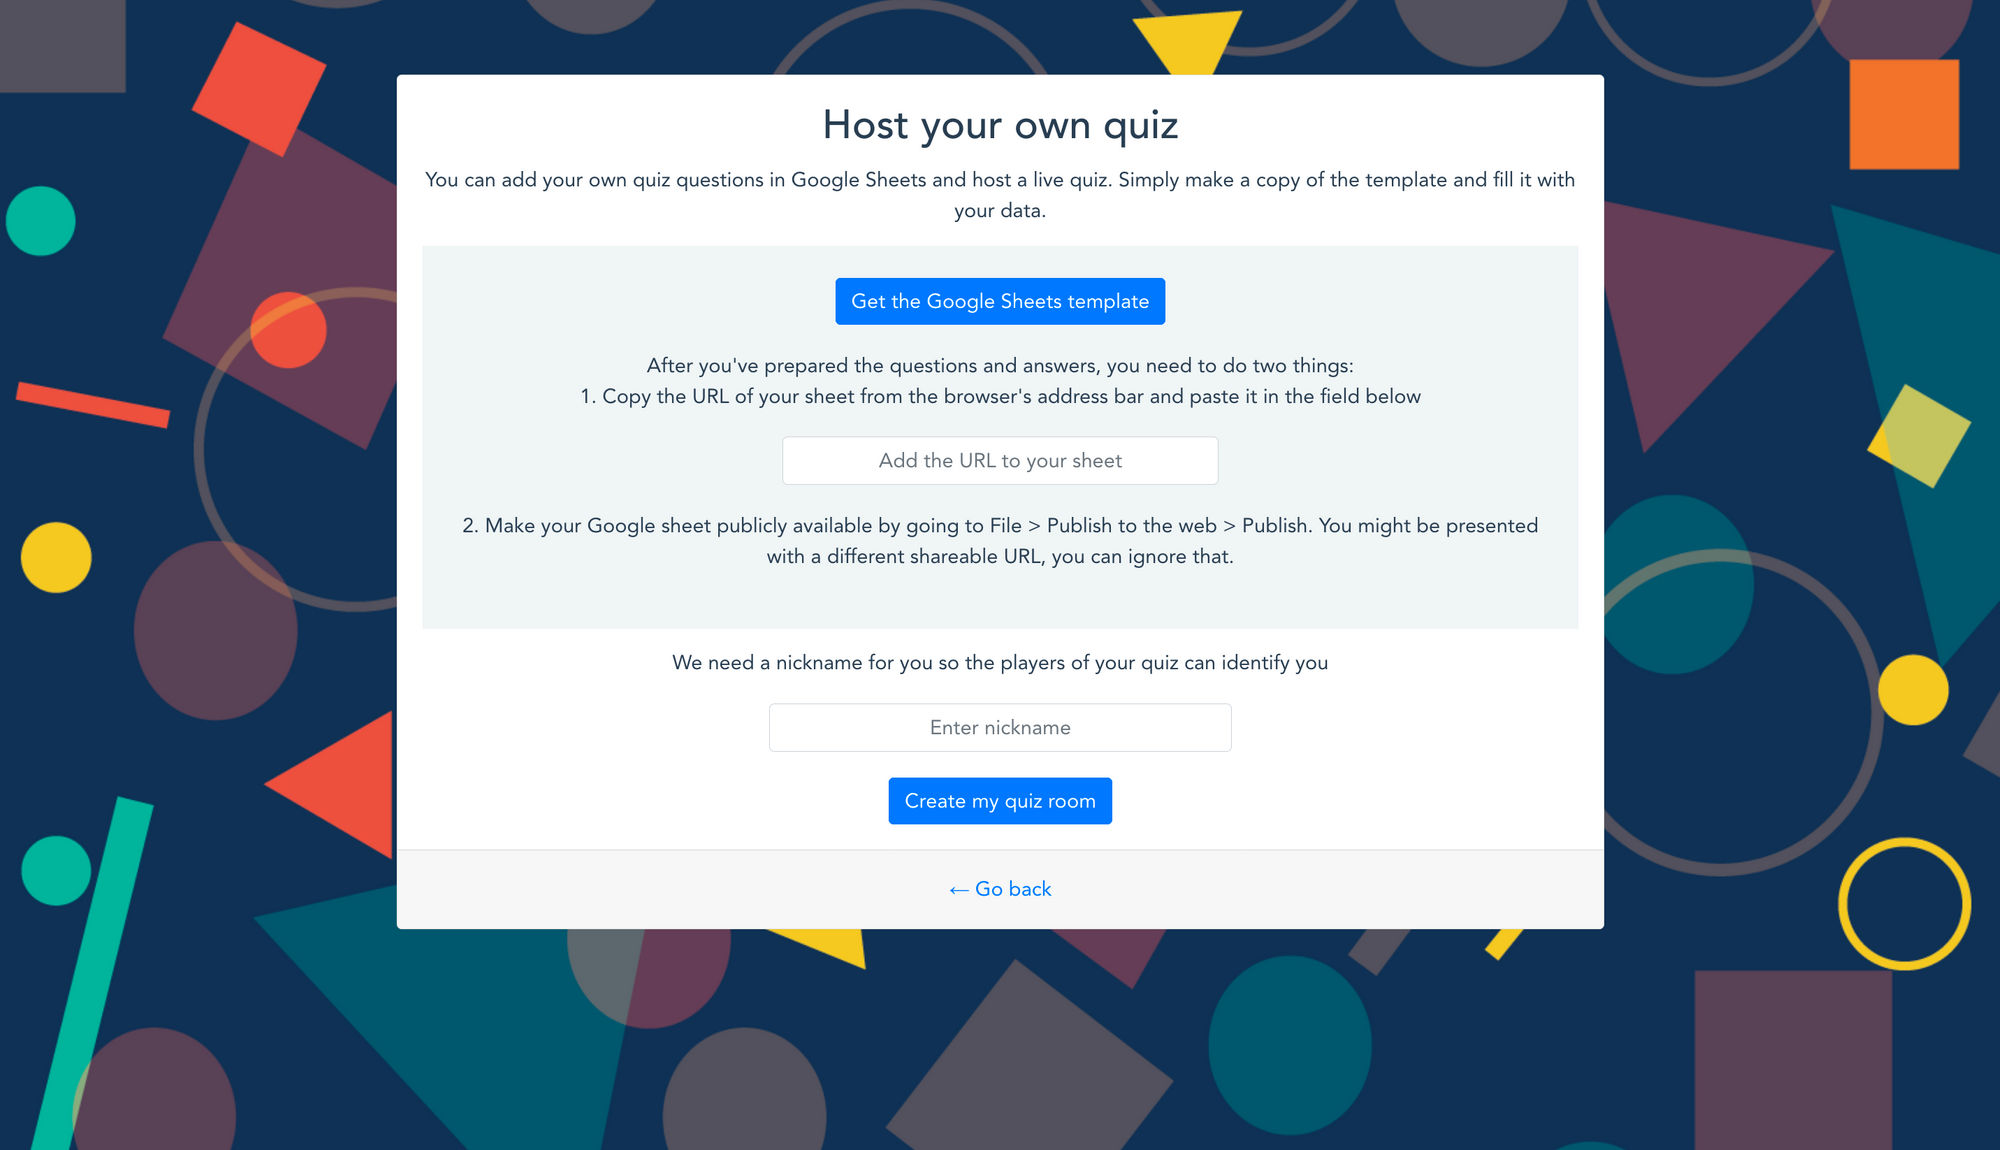 A screenshot of the live quiz application